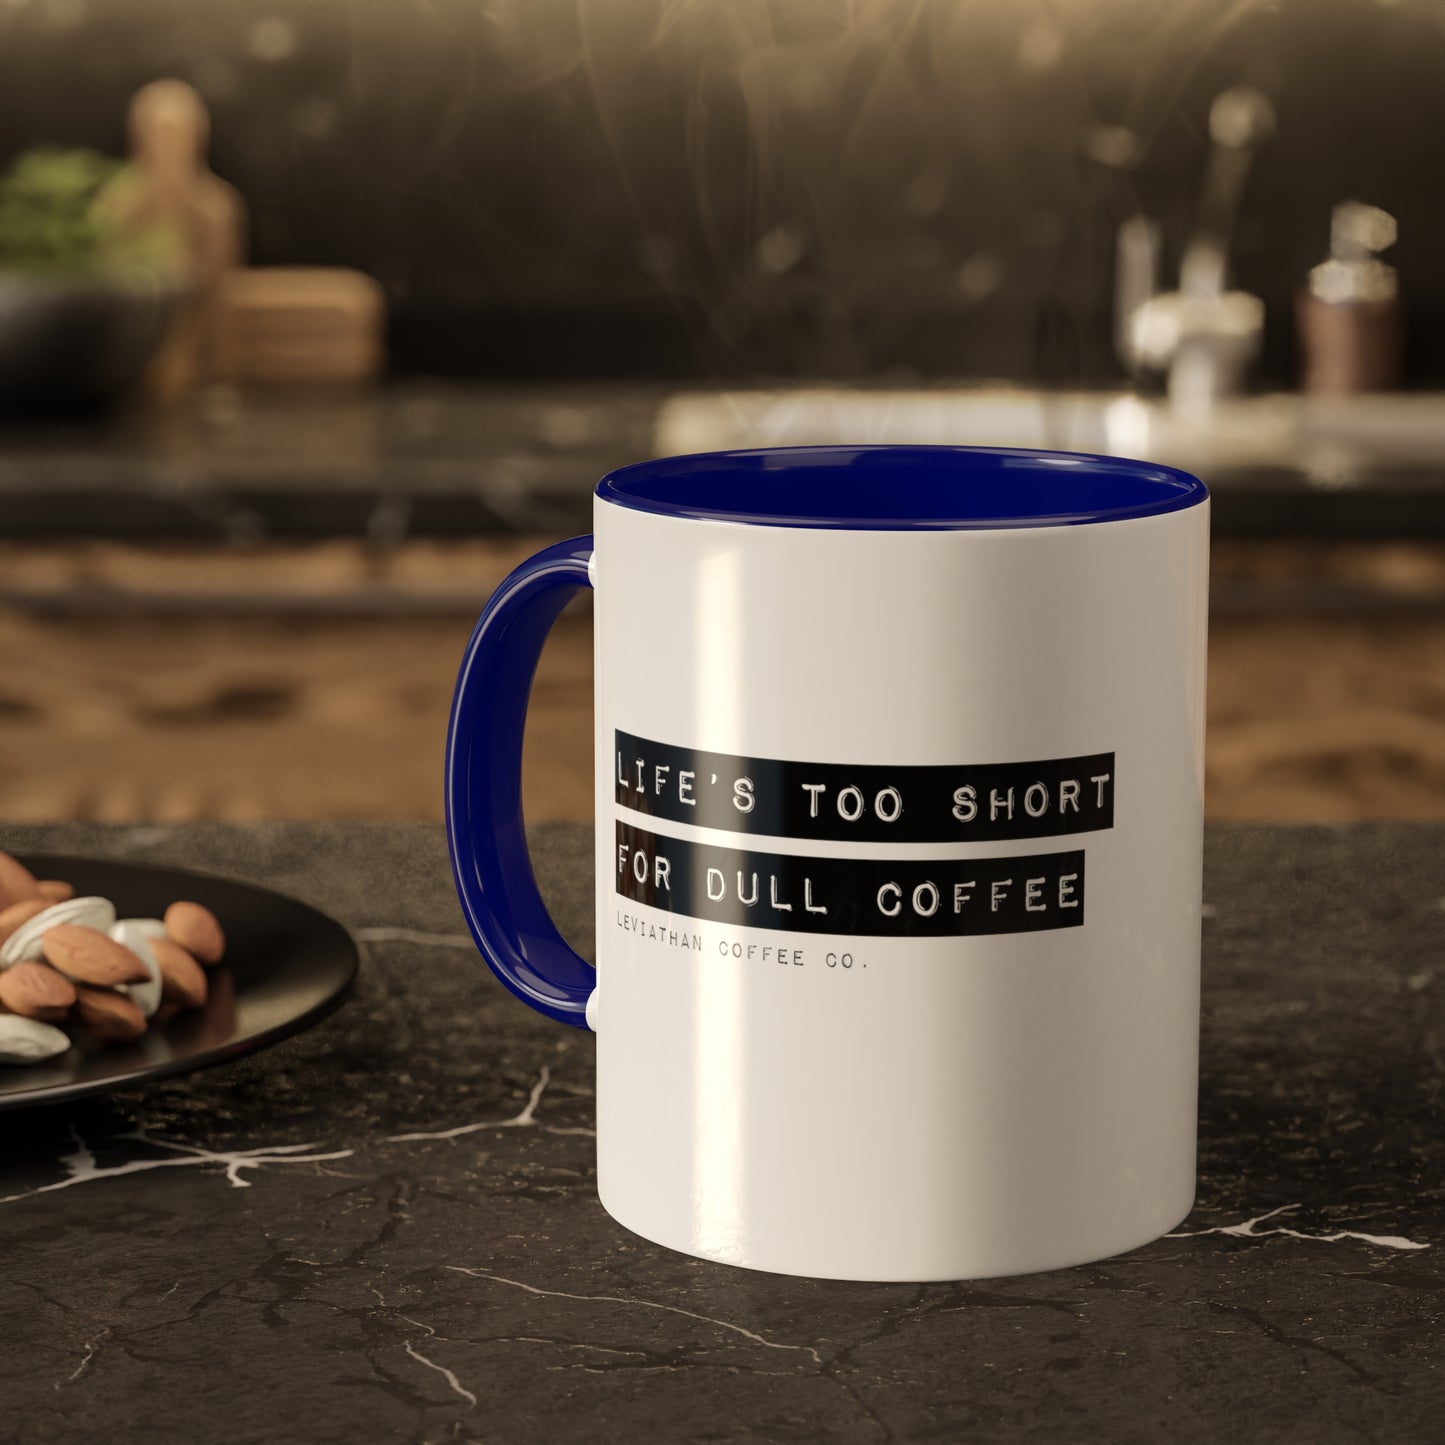 Life's Too Short for Dull Coffee coffee mug